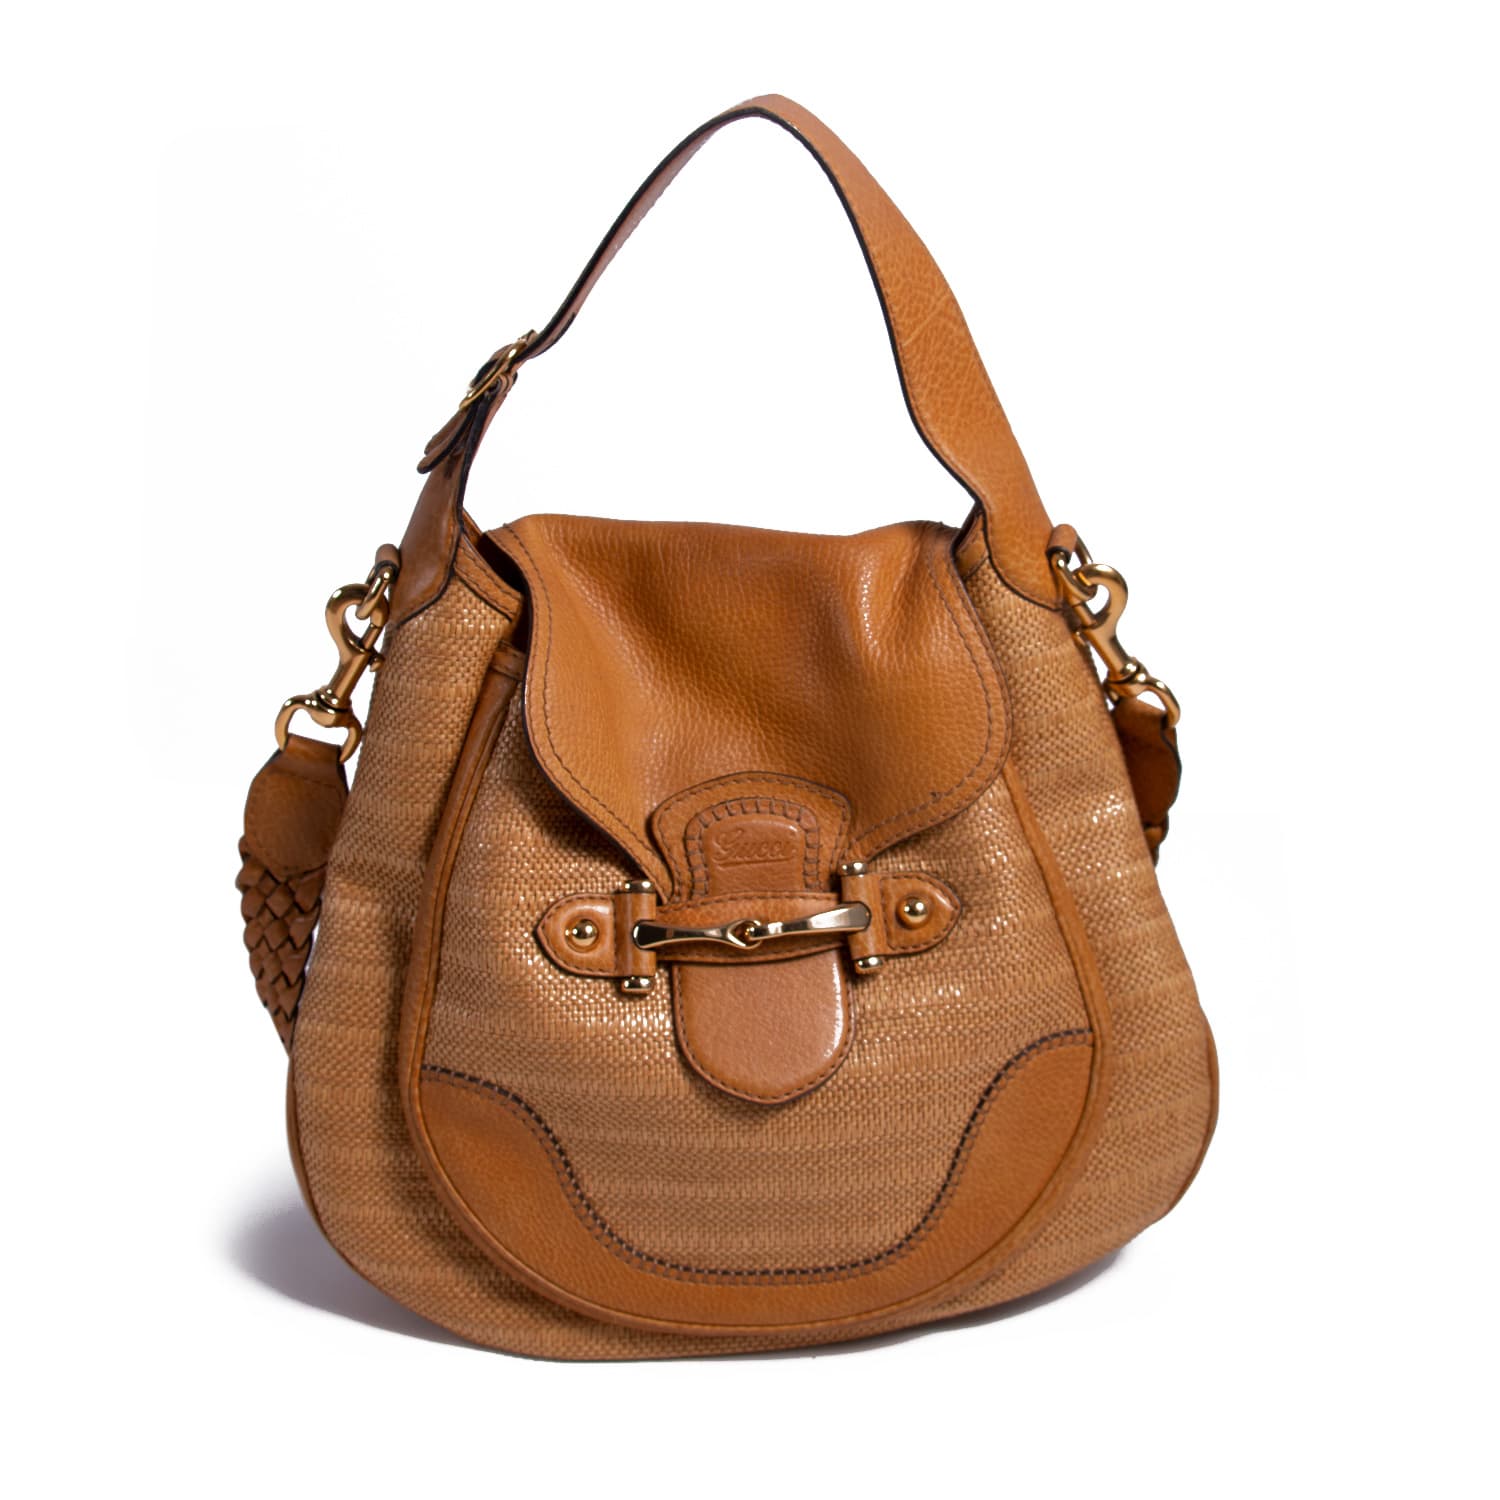 Shop authentic Gucci Large Pelham Bag at revogue for just USD 